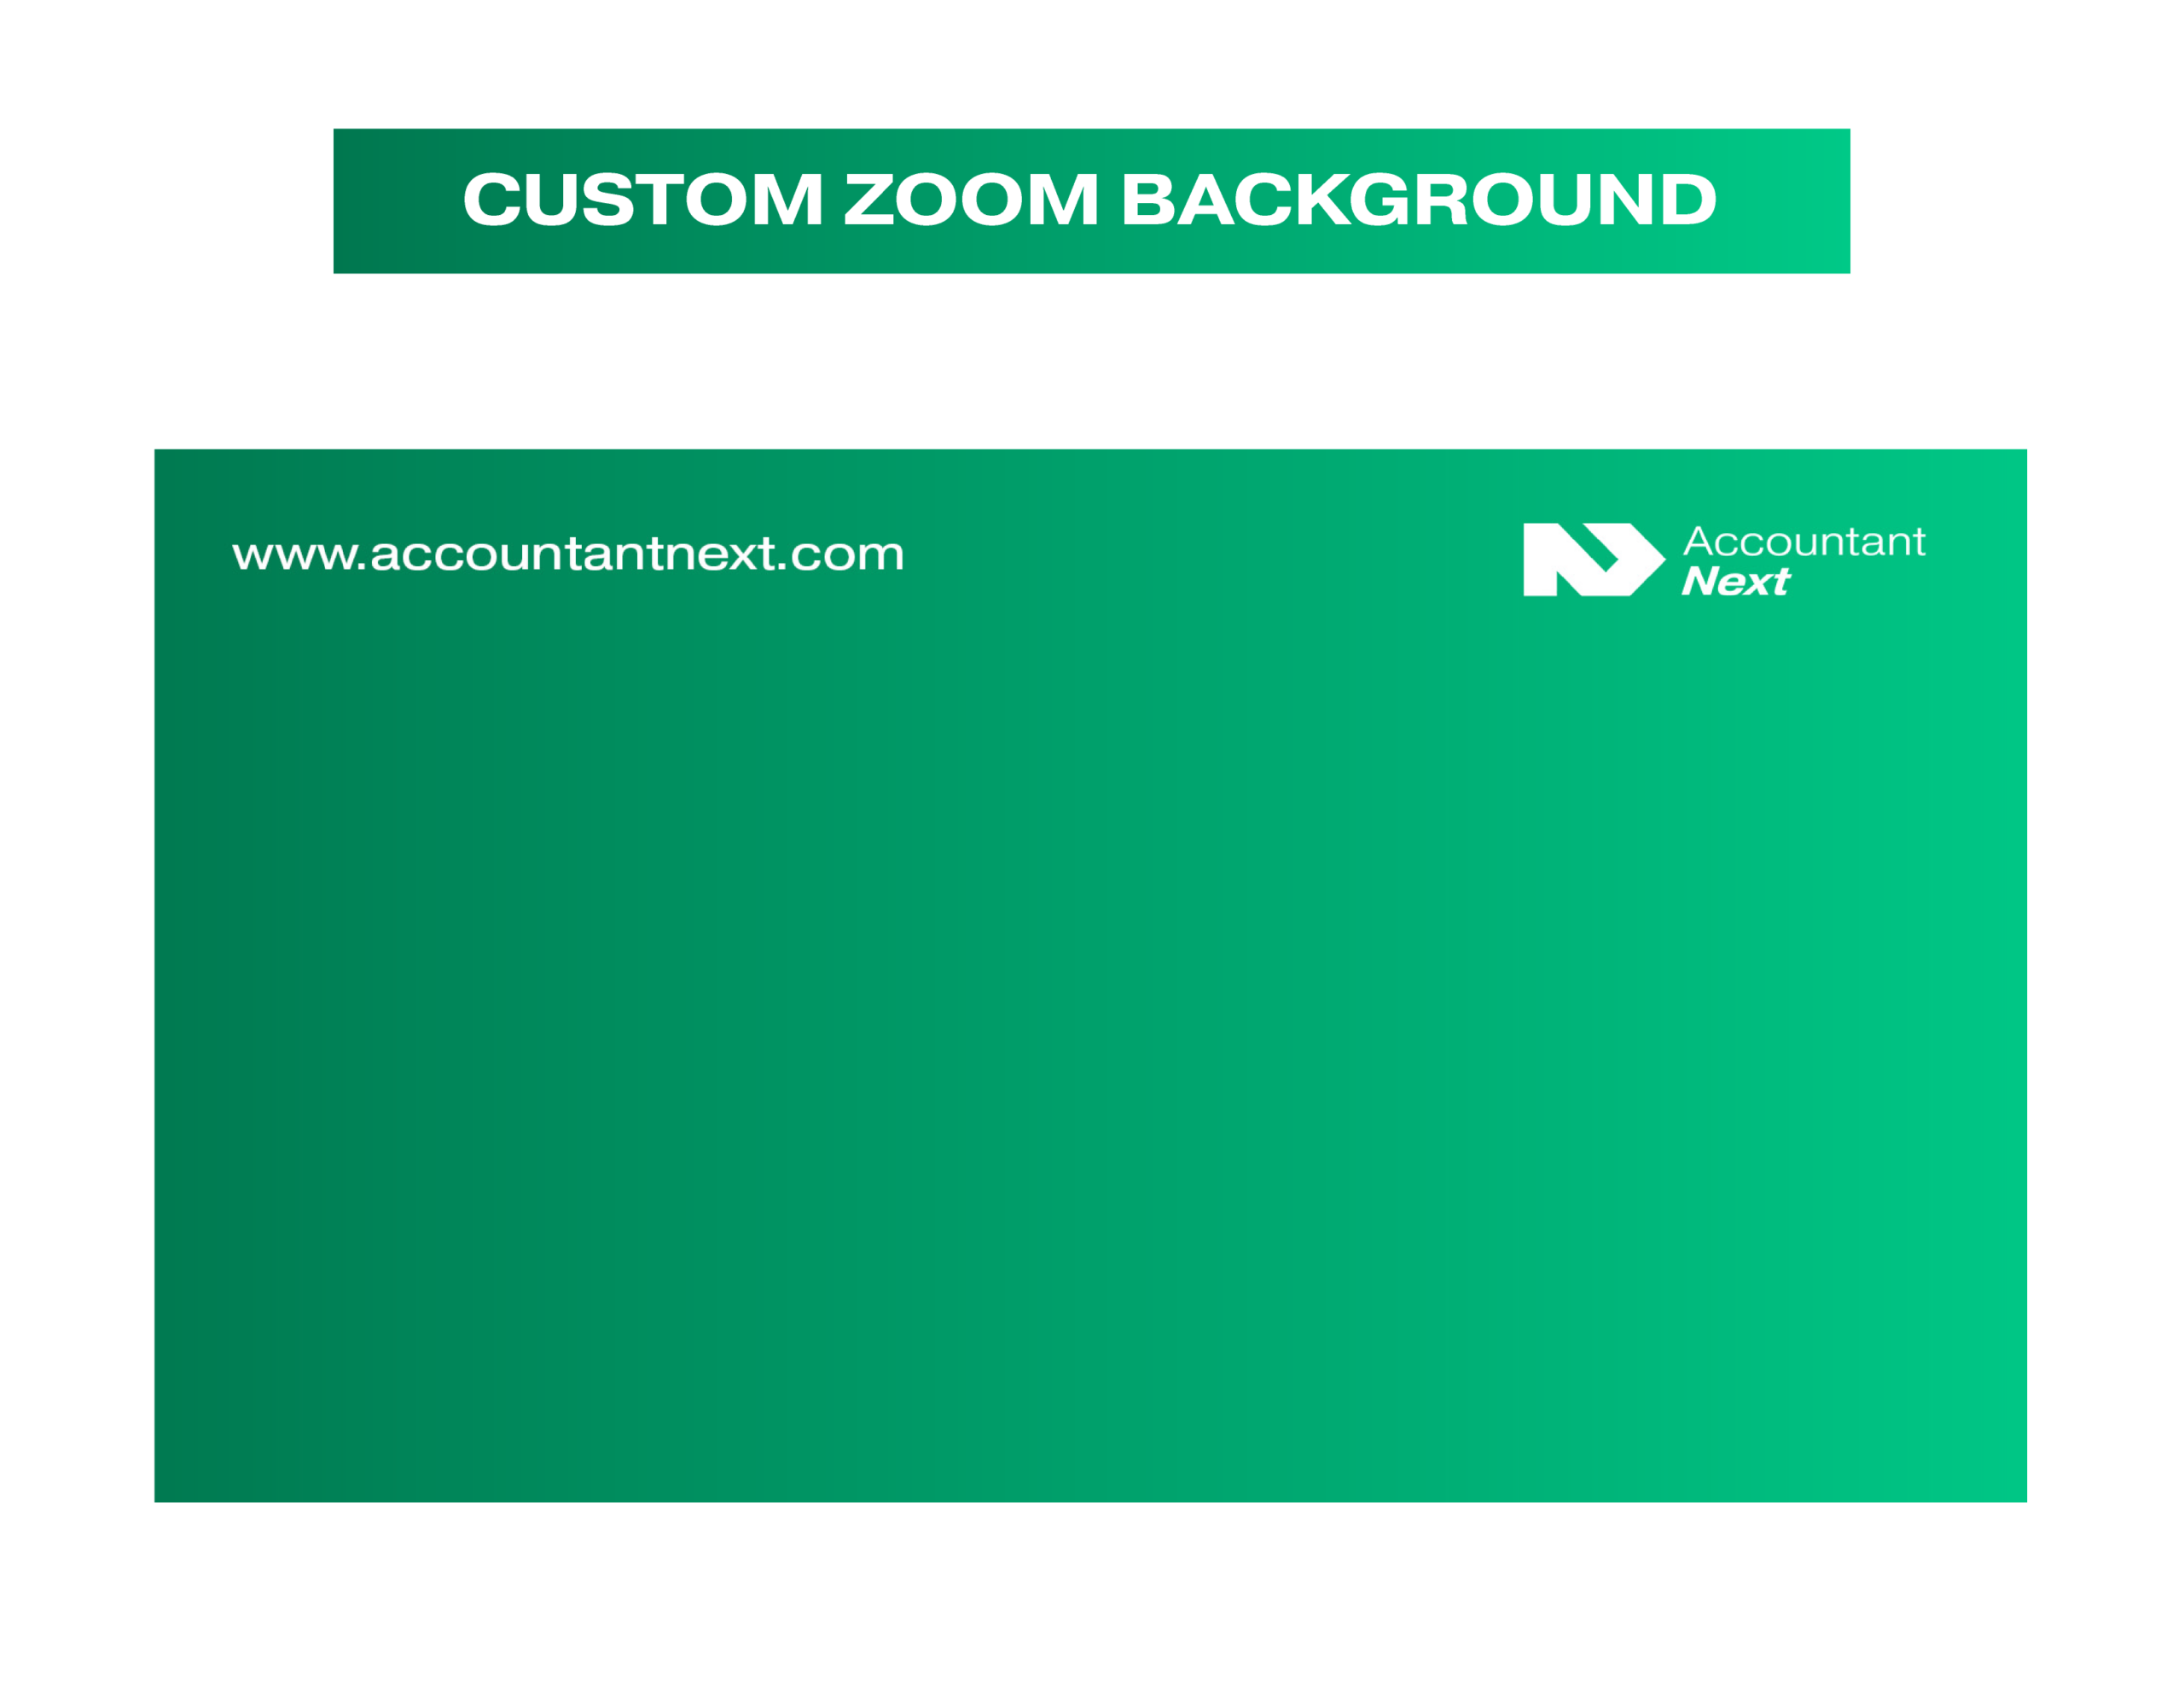 07AccountantNext_Showcase_Custom Zoom Background